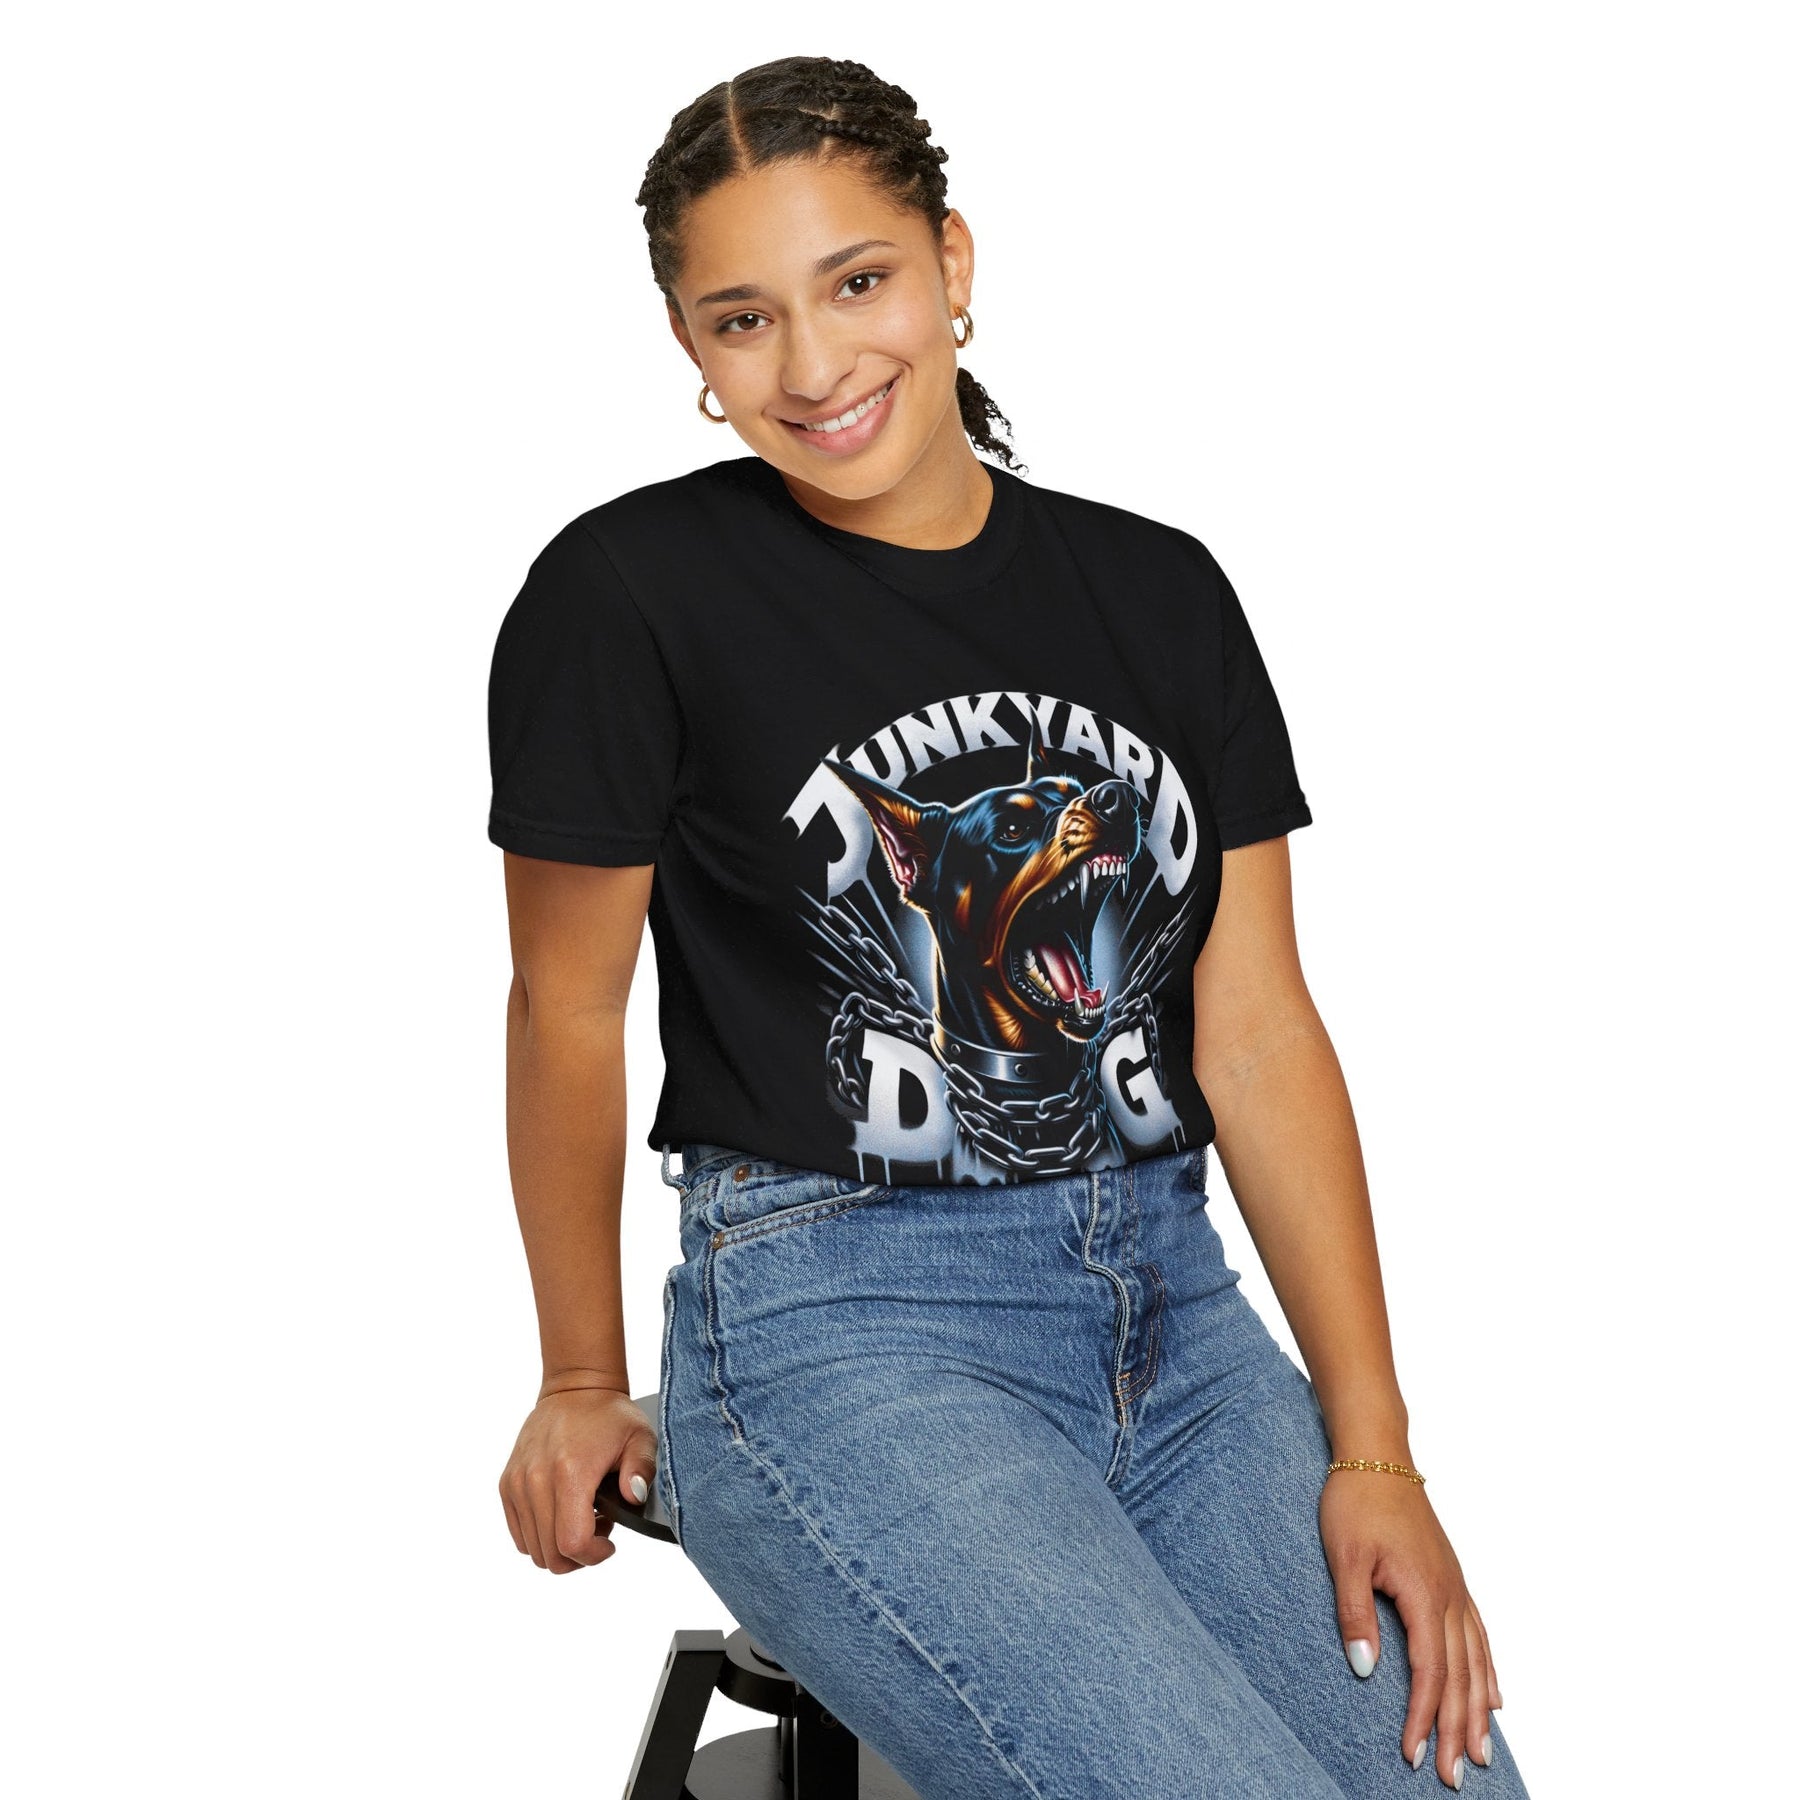 Junkyard Dog Unisex T - shirt - Goth Cloth Co.T - Shirt17736346067953706043